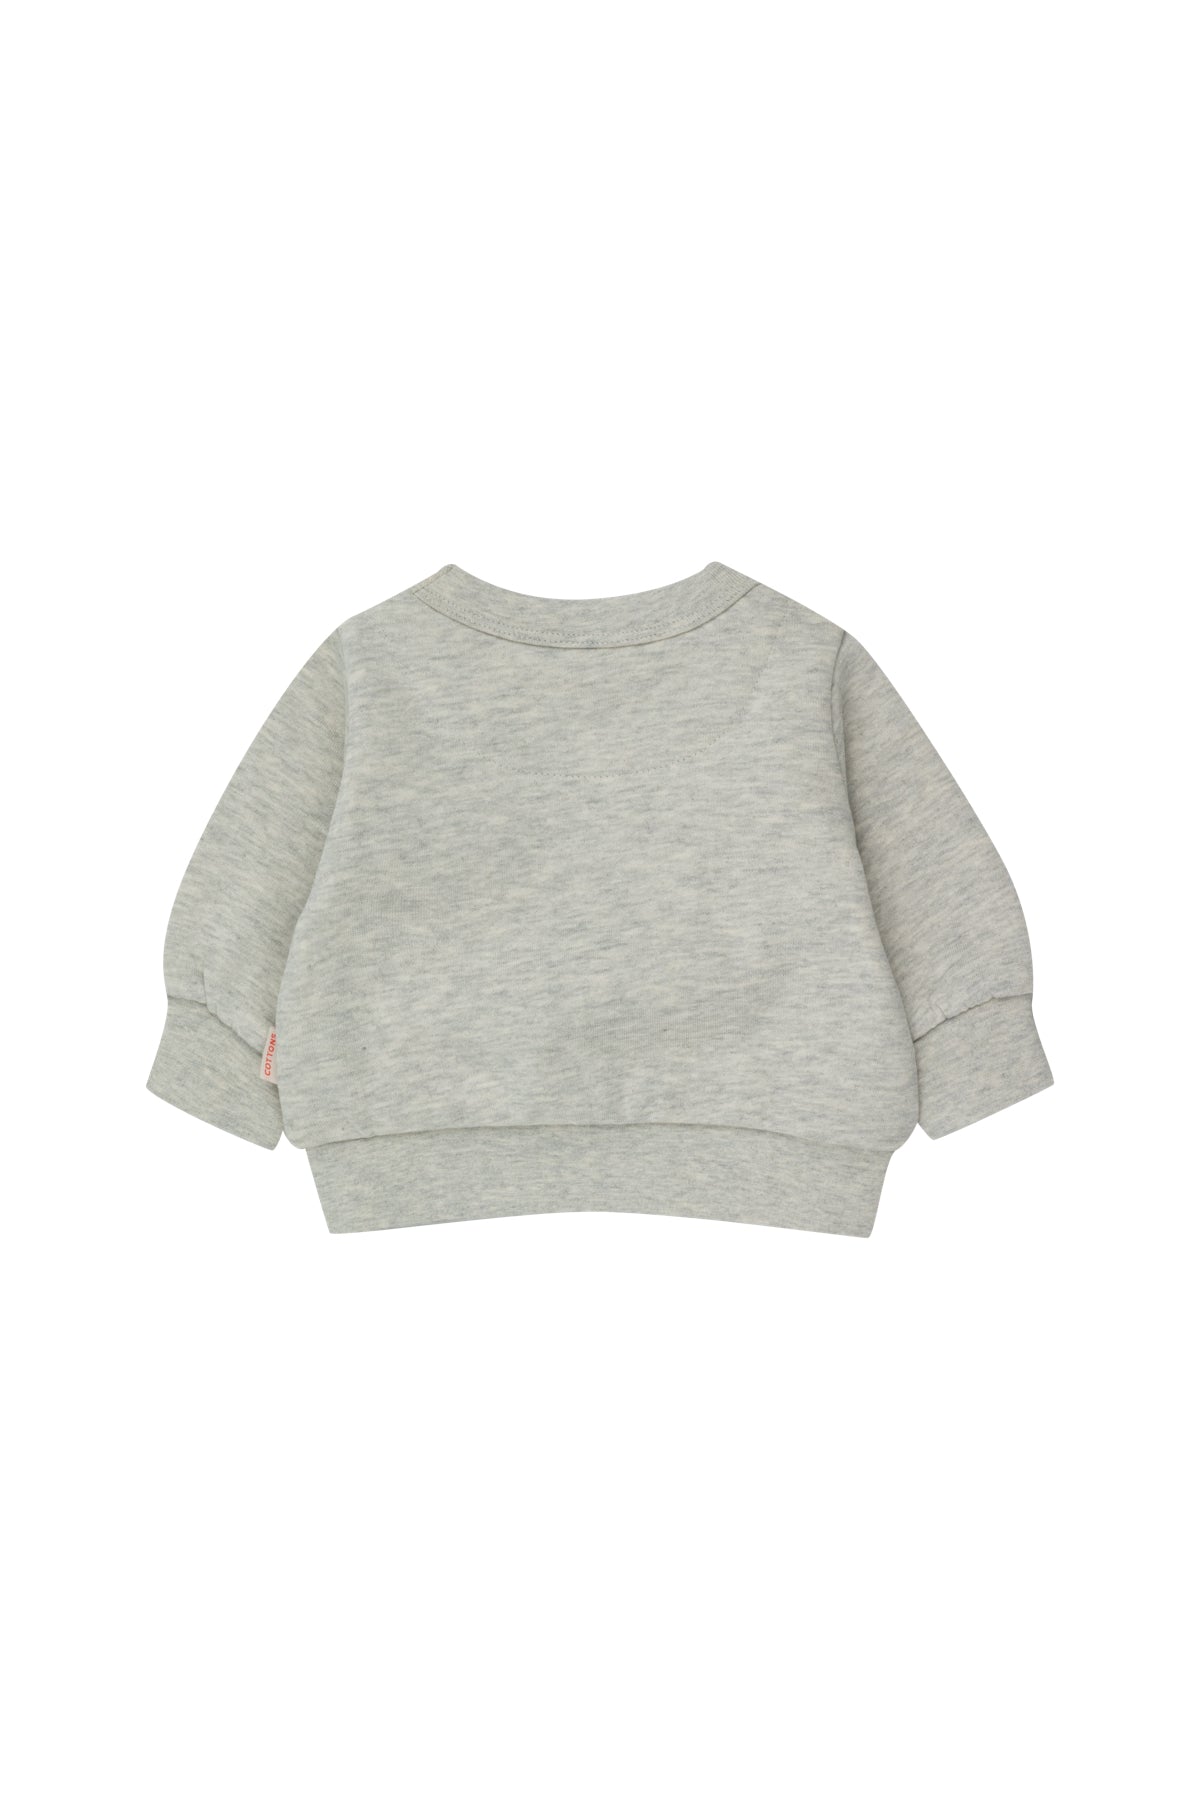 Tiny Cottons Doux Chamonix Baby Sweatshirt - Light Cream Heather